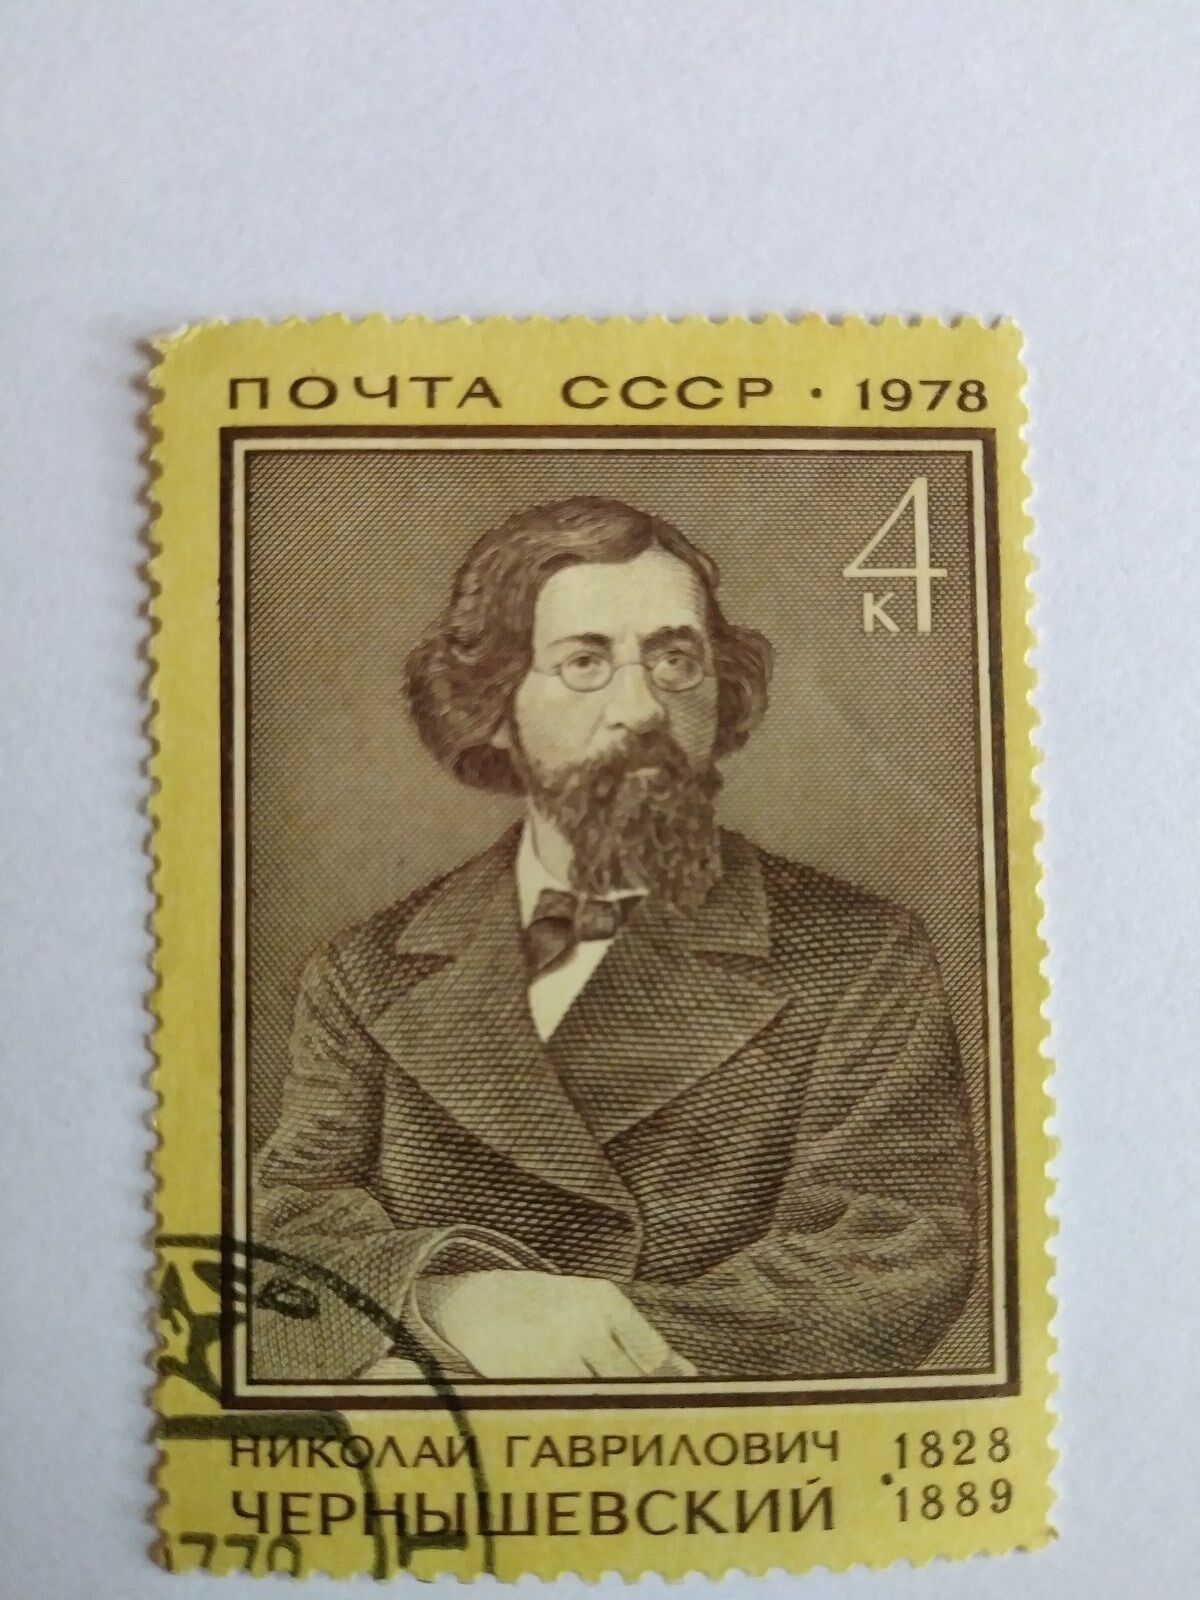 CCCP USSR RUSSIA POST STAMP 1978. Николай Гаврилович Чернышевский 1828-1889